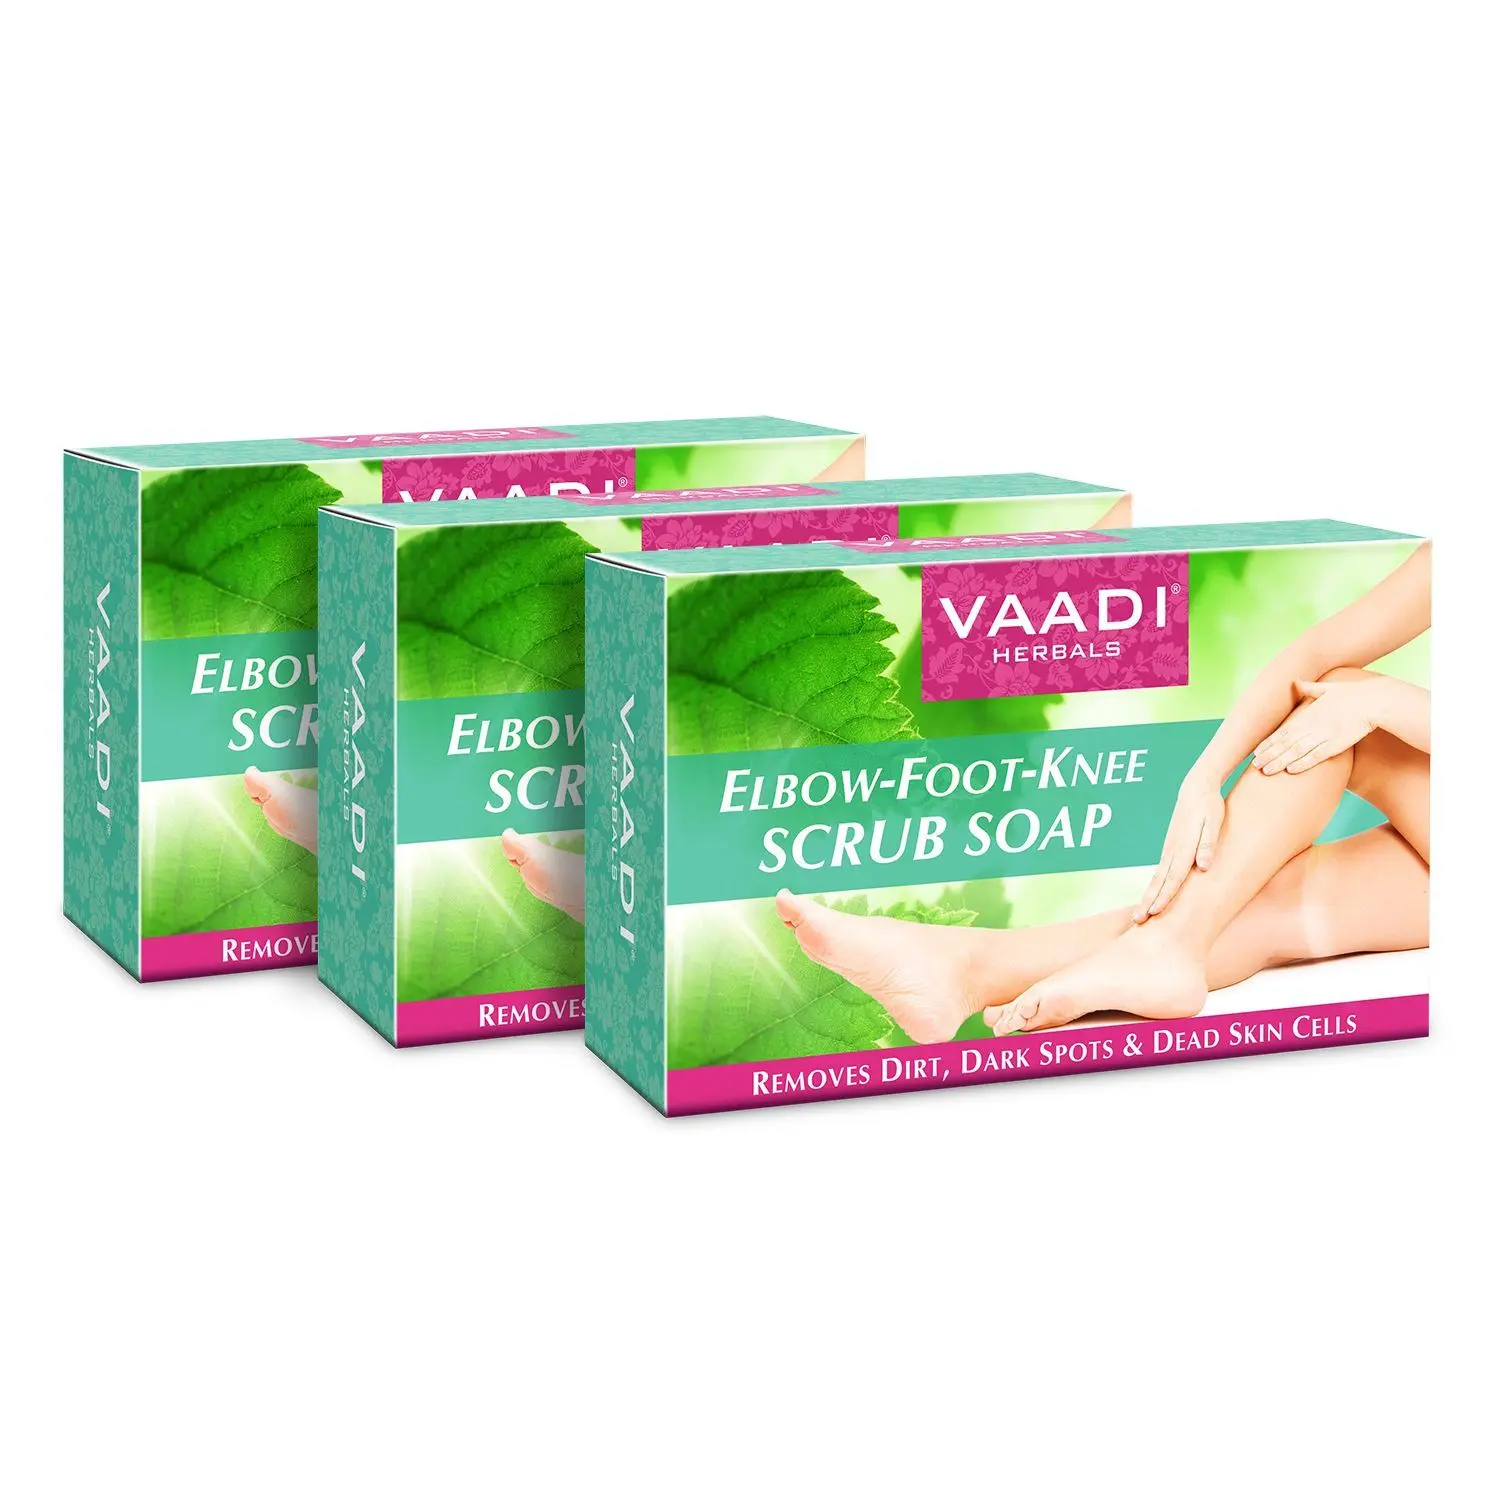 Vaadi Herbals Elbow-Foot-Knee Scrub Soap With Almond & Walnut Scrub (75 g) (Pack of 3)